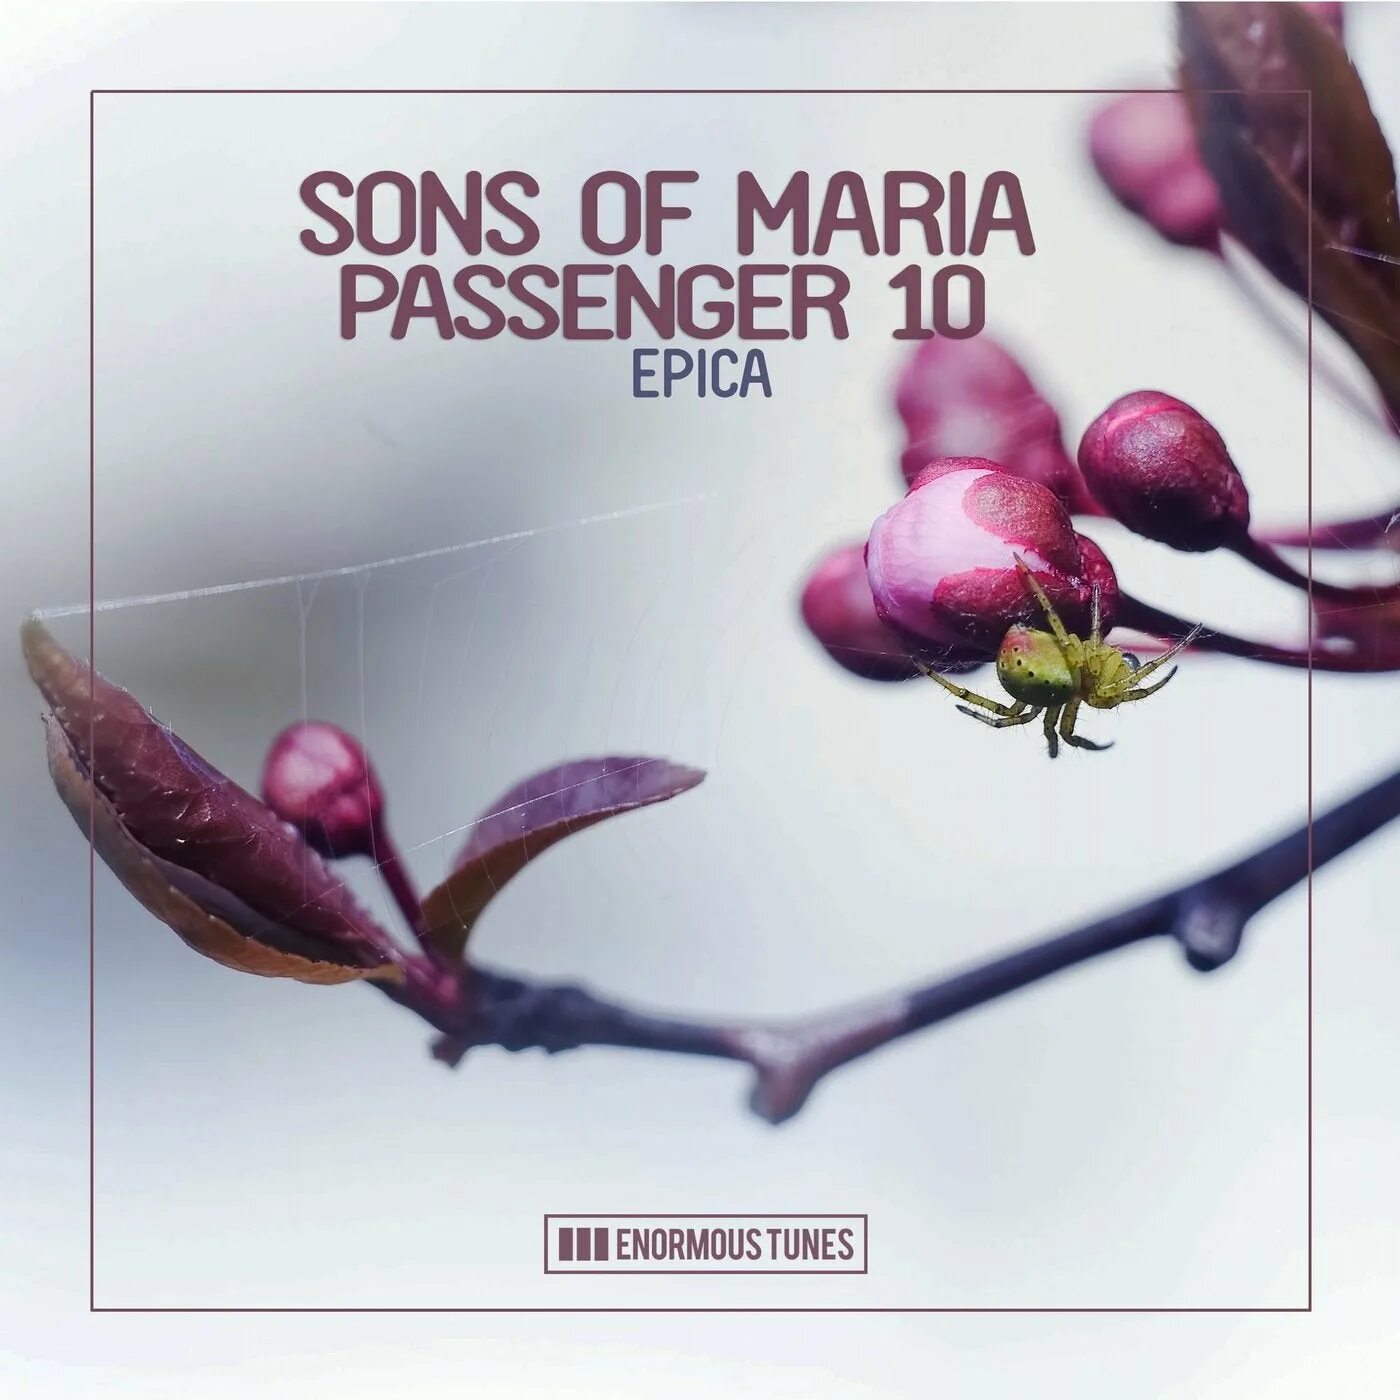 Passenger 10. "Sons of Maria" && ( исполнитель | группа | музыка | Music | Band | artist ) && (фото | photo). Sons of Maria певица.